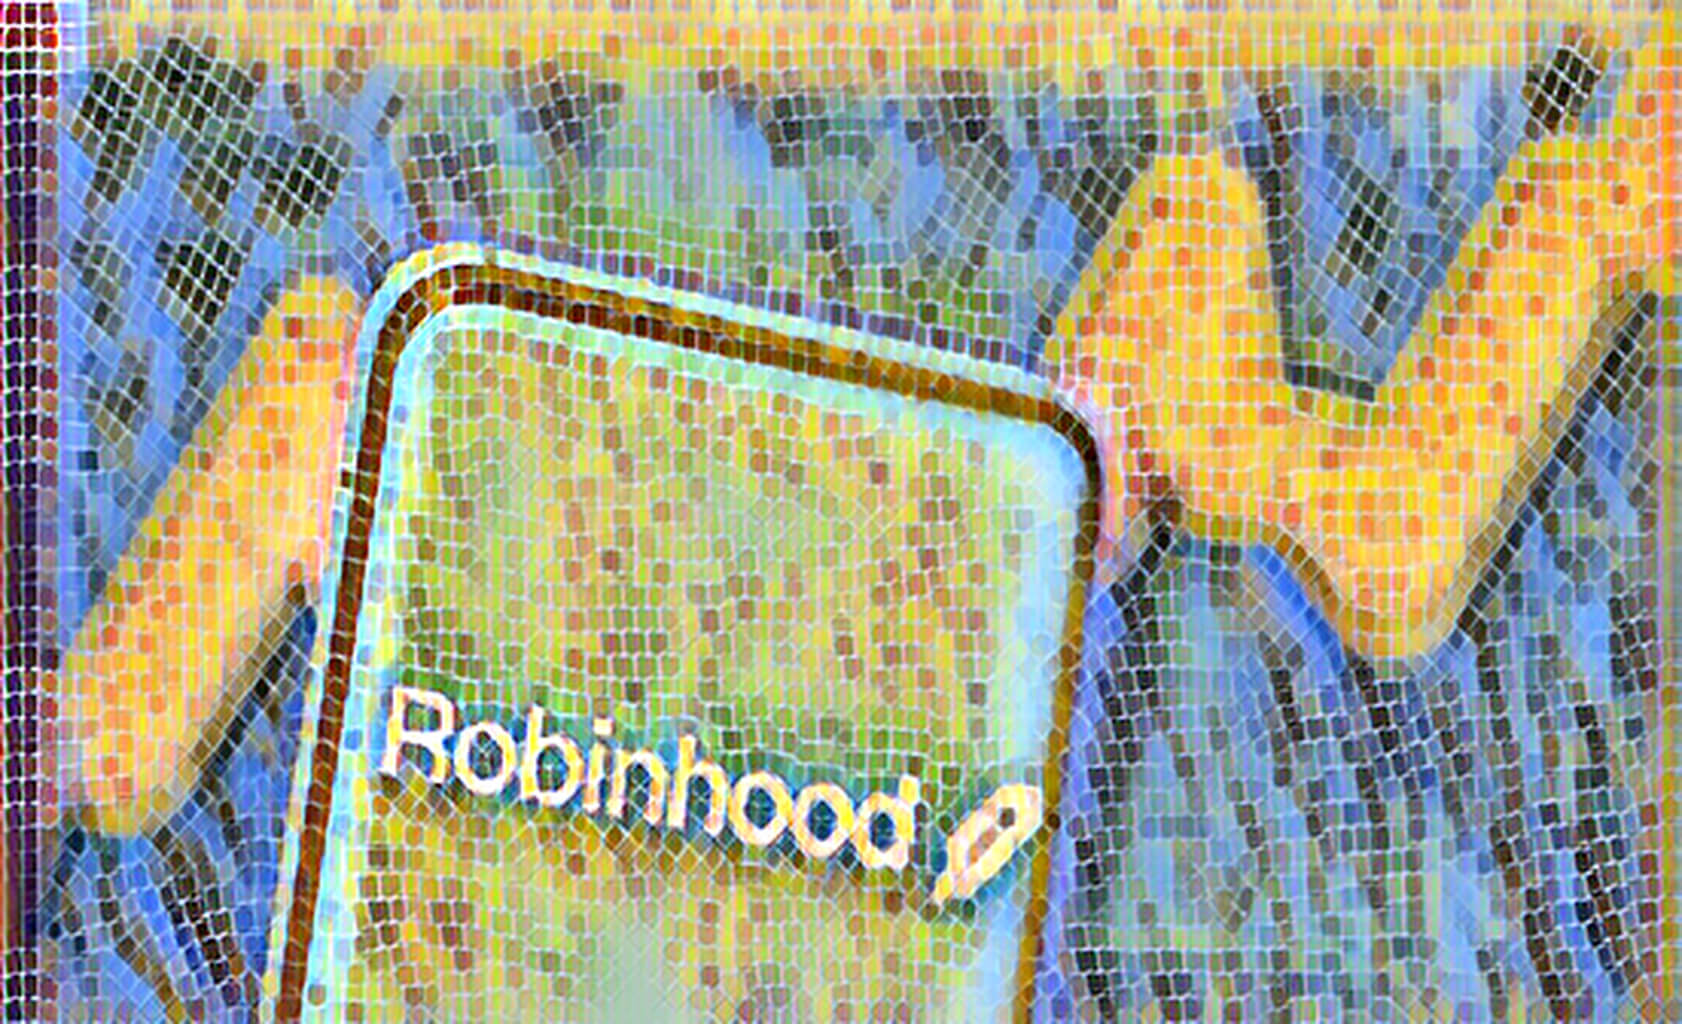      Robinhood,   